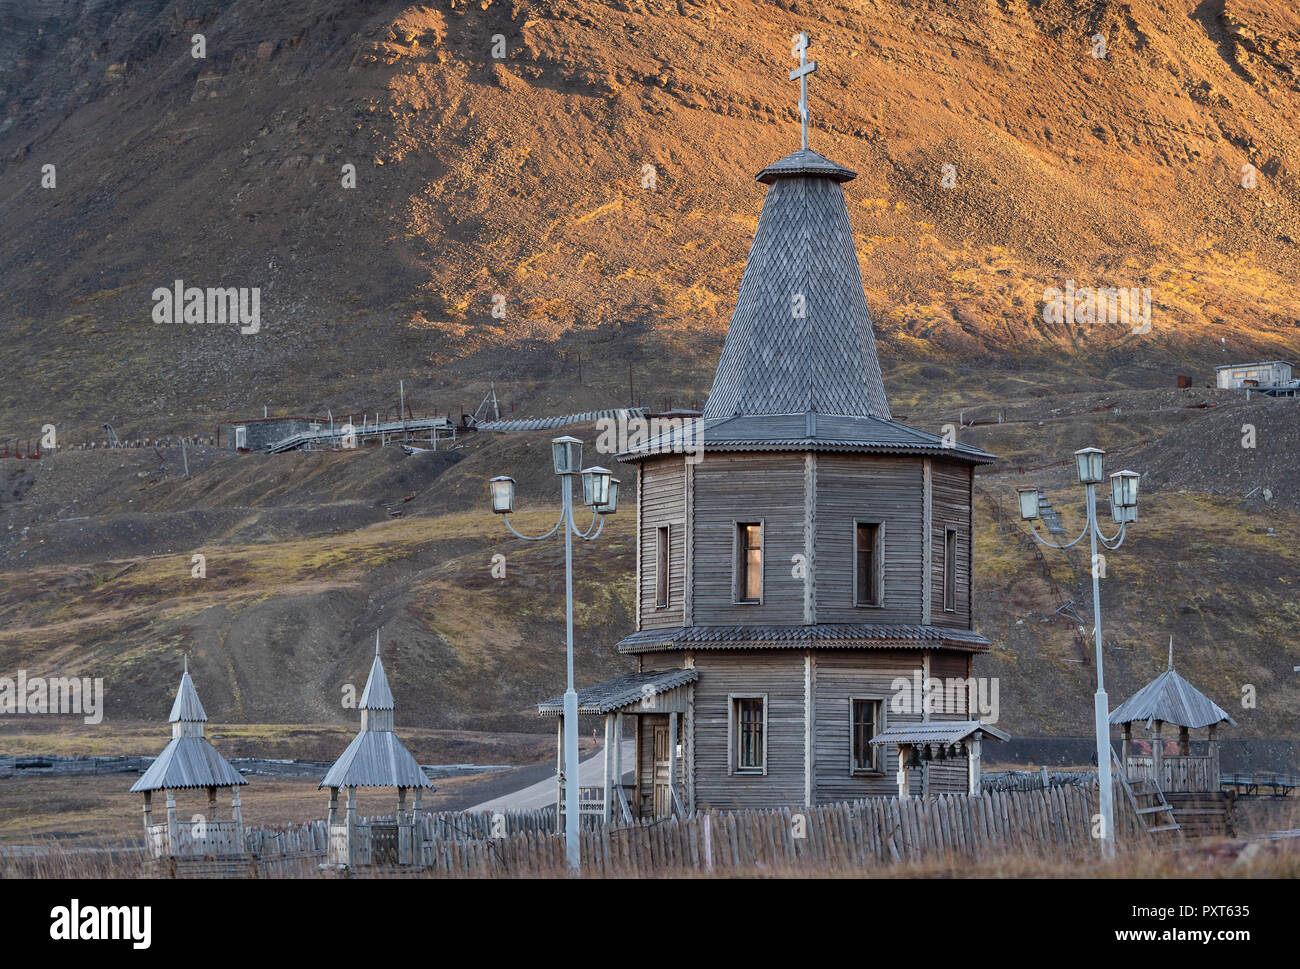 Église orthodoxe russe en bois, des mineurs russe Barentsburg, Règlement Isfjorden, Spitsbergen, Svalbard, Norvège Banque D'Images